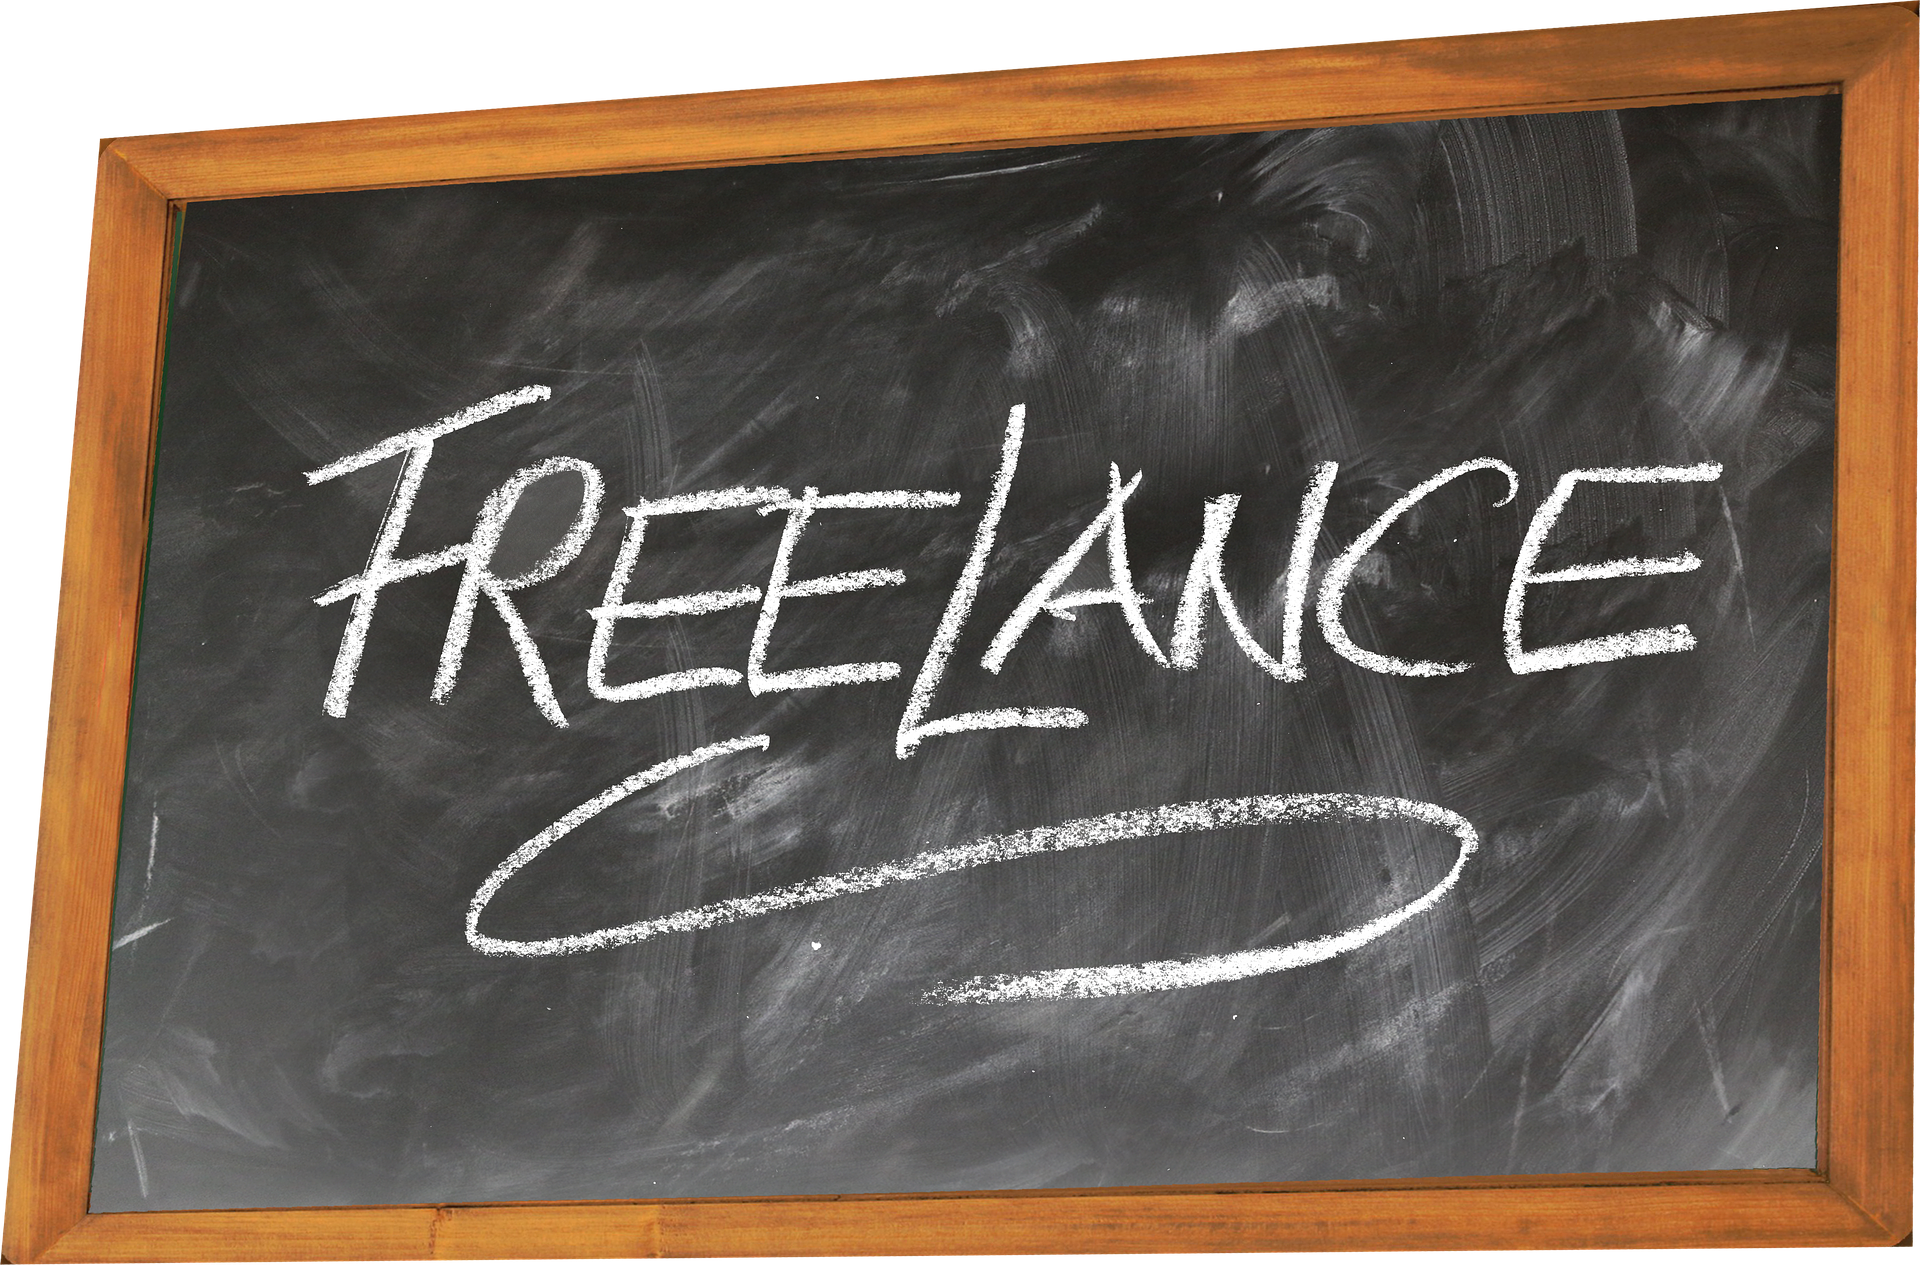 Are you a freelancer?